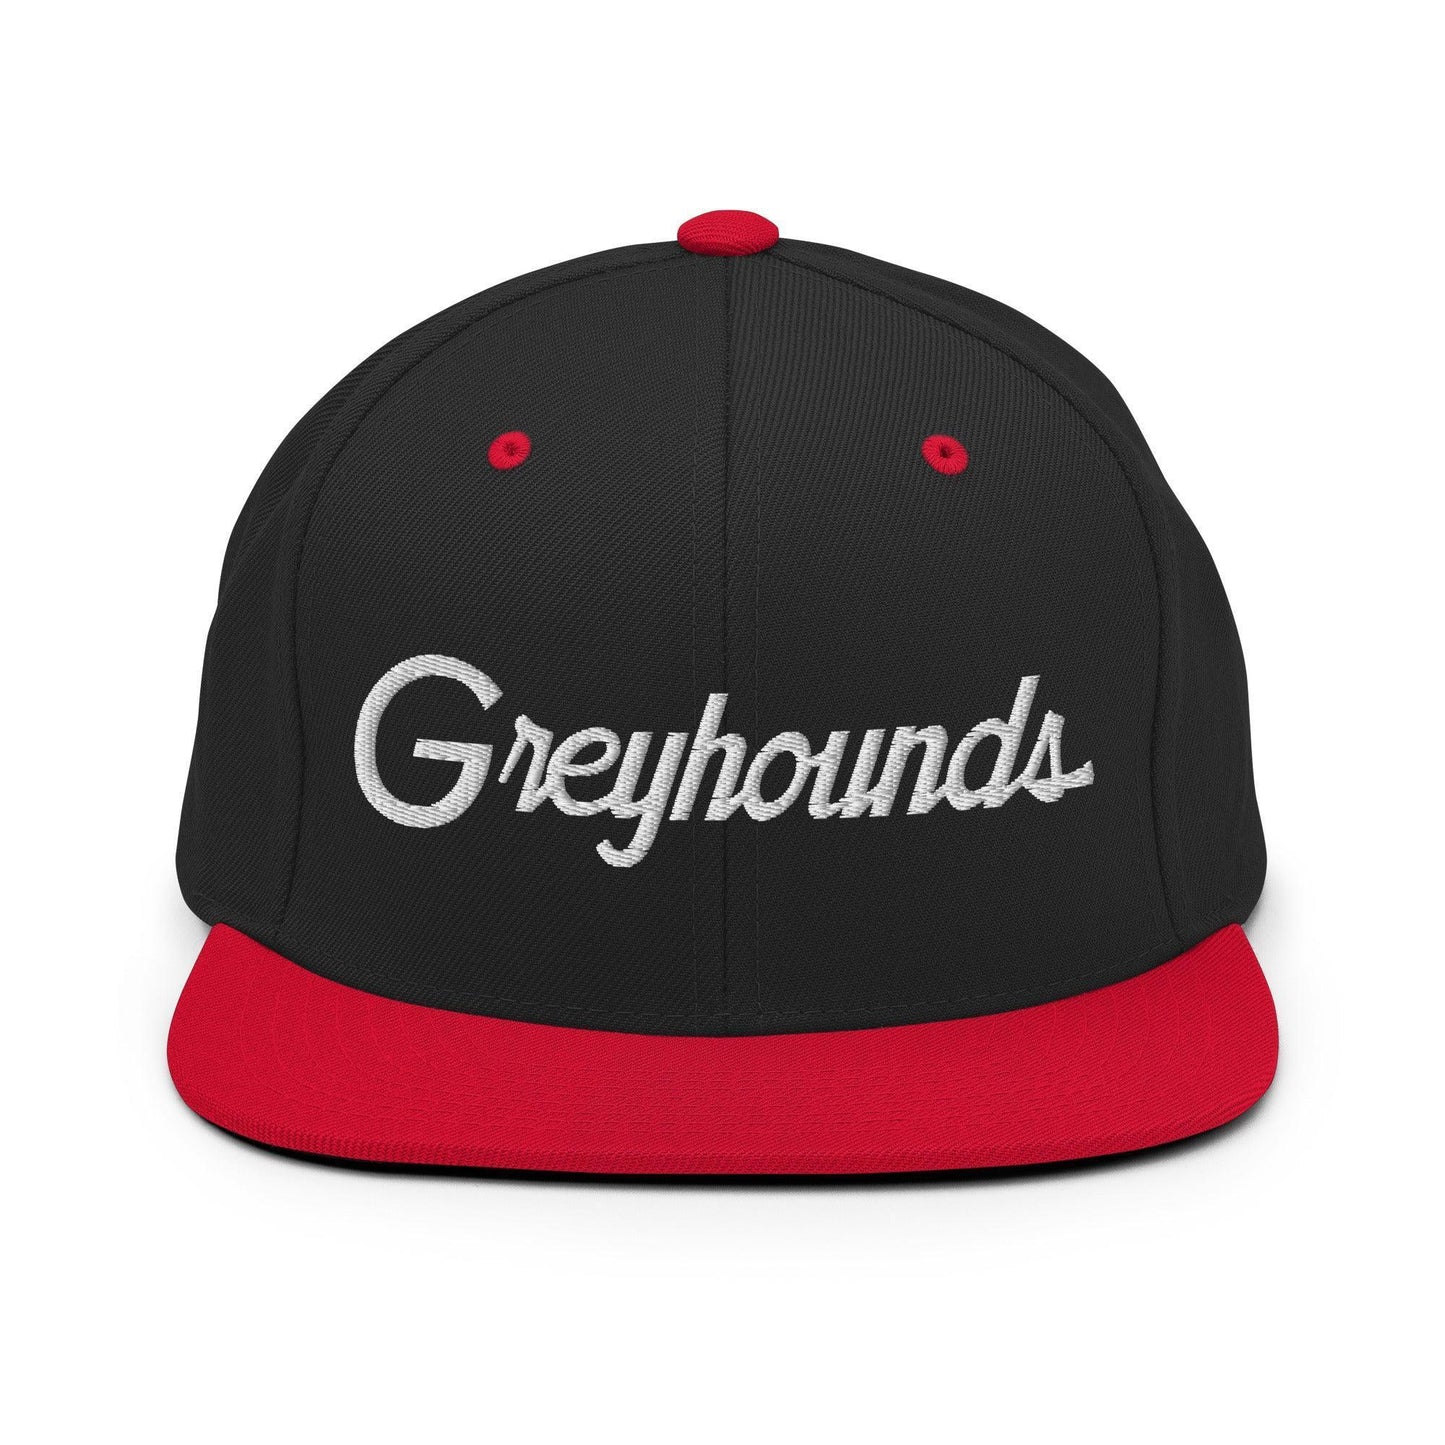 Greyhounds School Mascot Script Snapback Hat Black Red